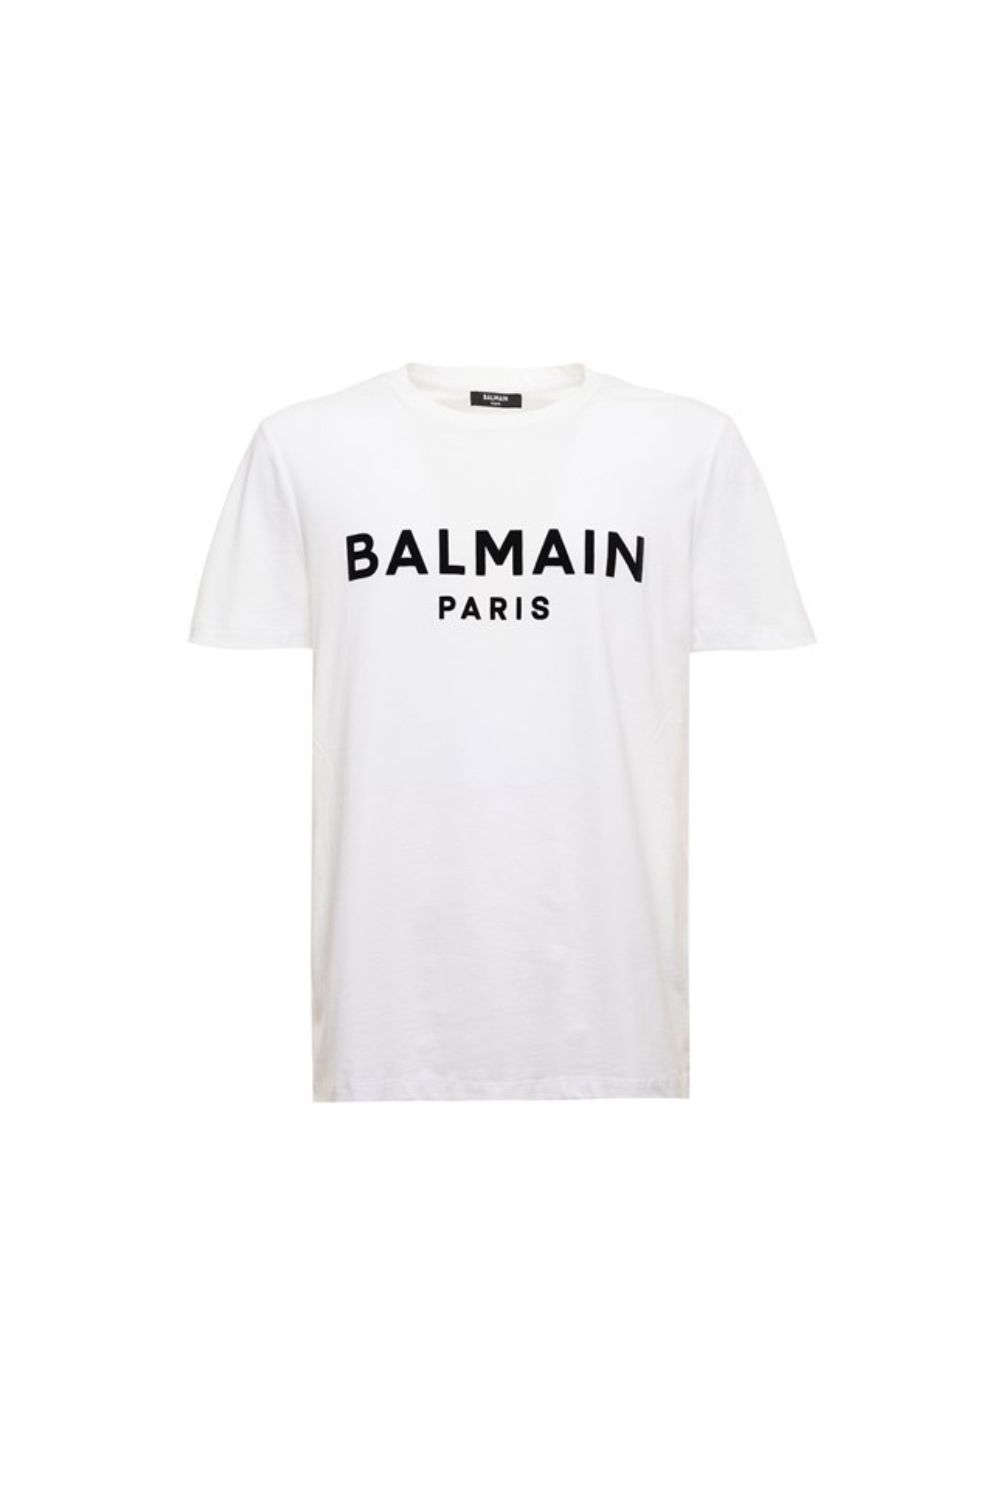 Balmain Paris T shirt con logo